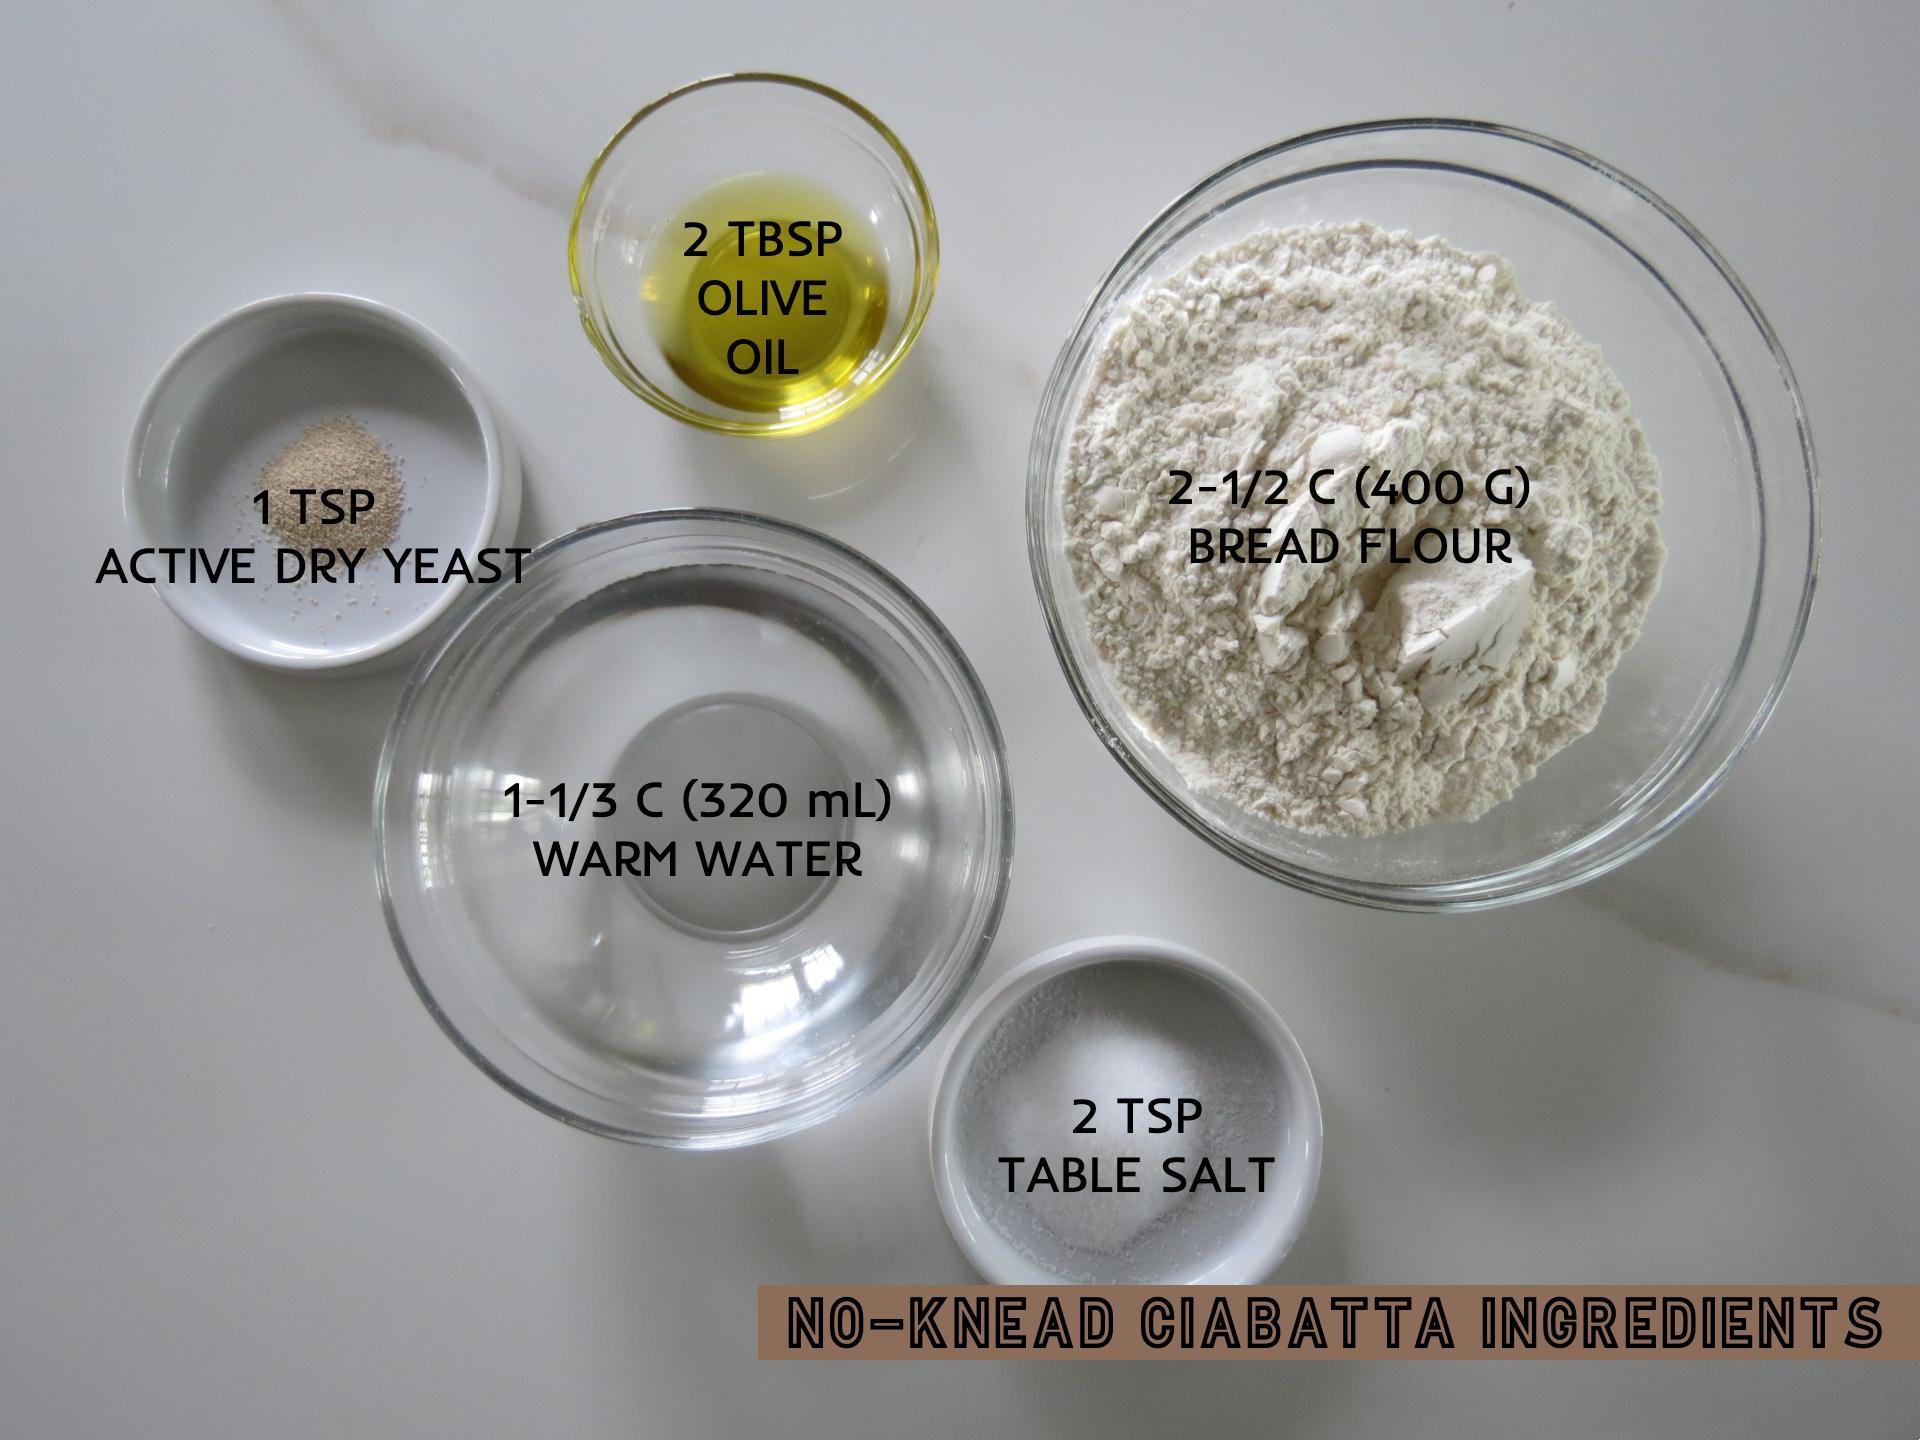 No-Knead Ciabatta Ingredients.jpg